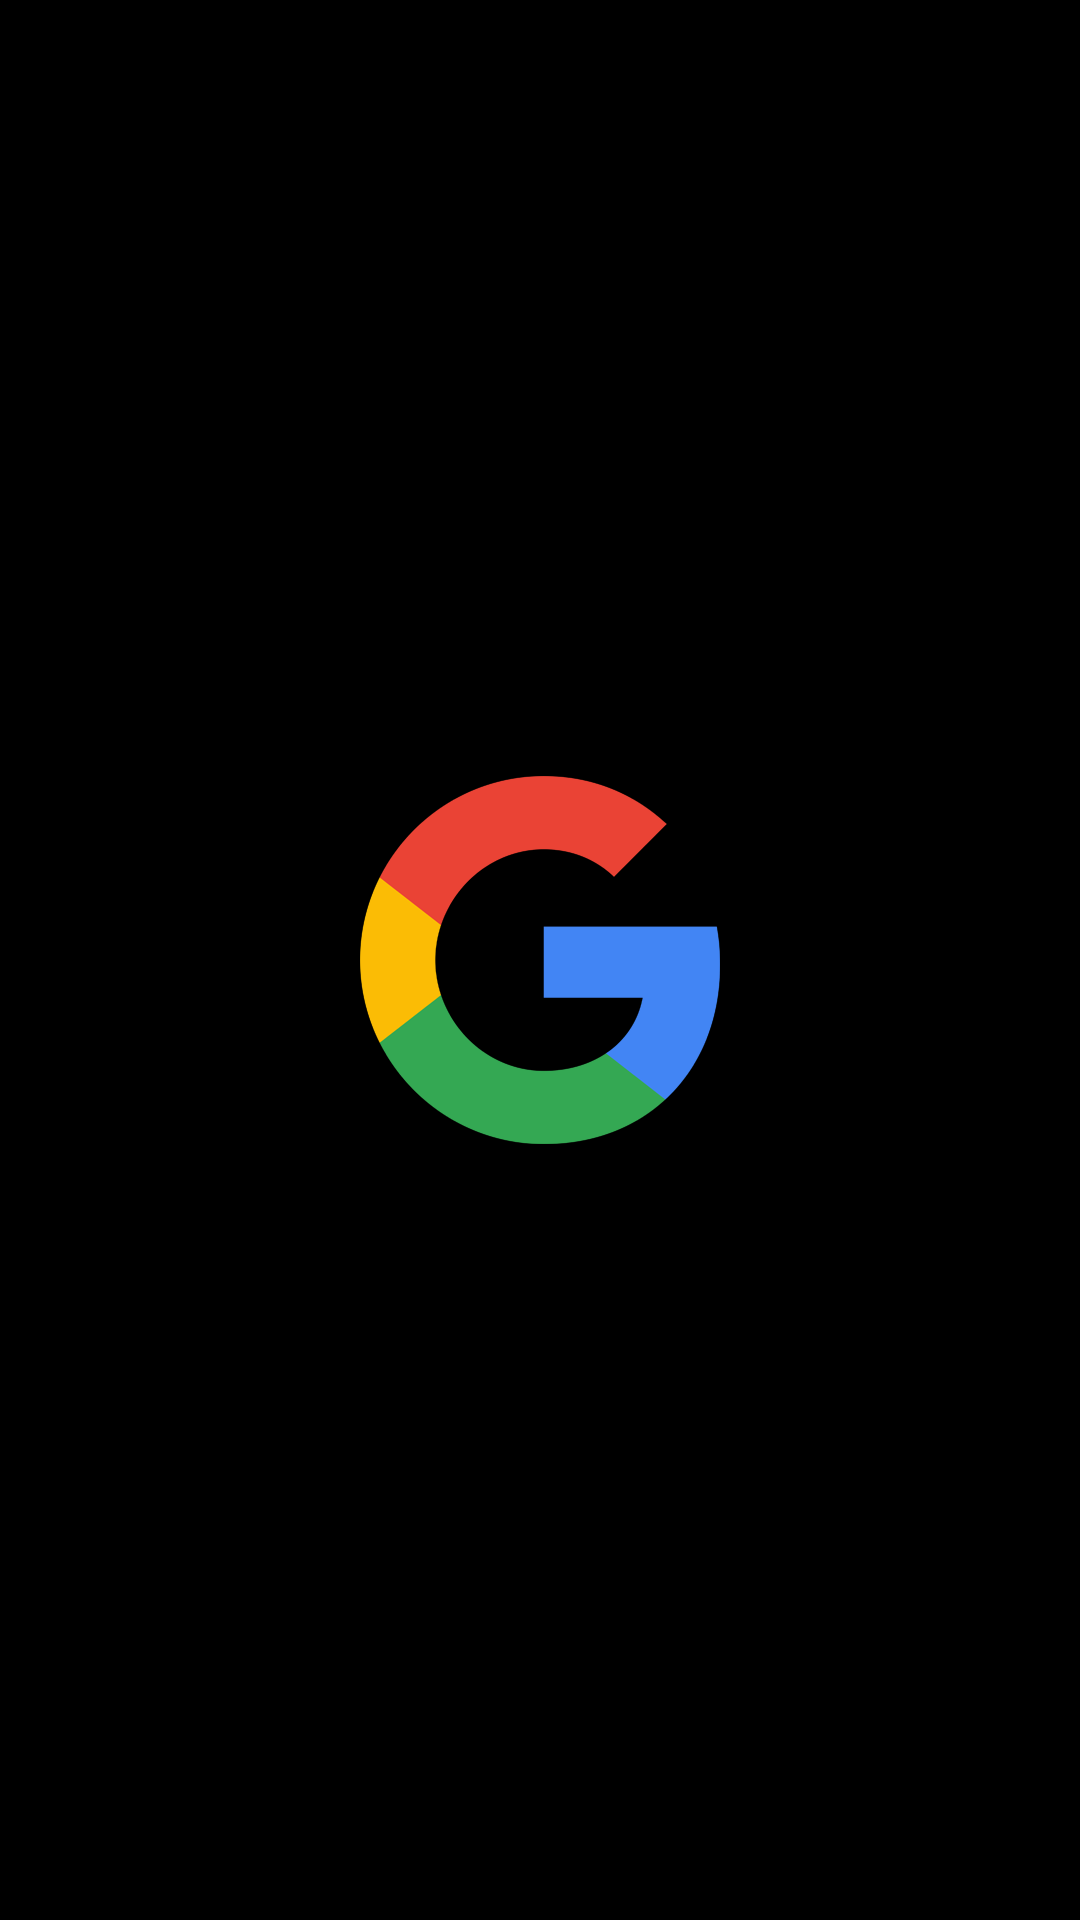 Google Logo Wallpaper Hd For Mobile - HD Wallpaper 